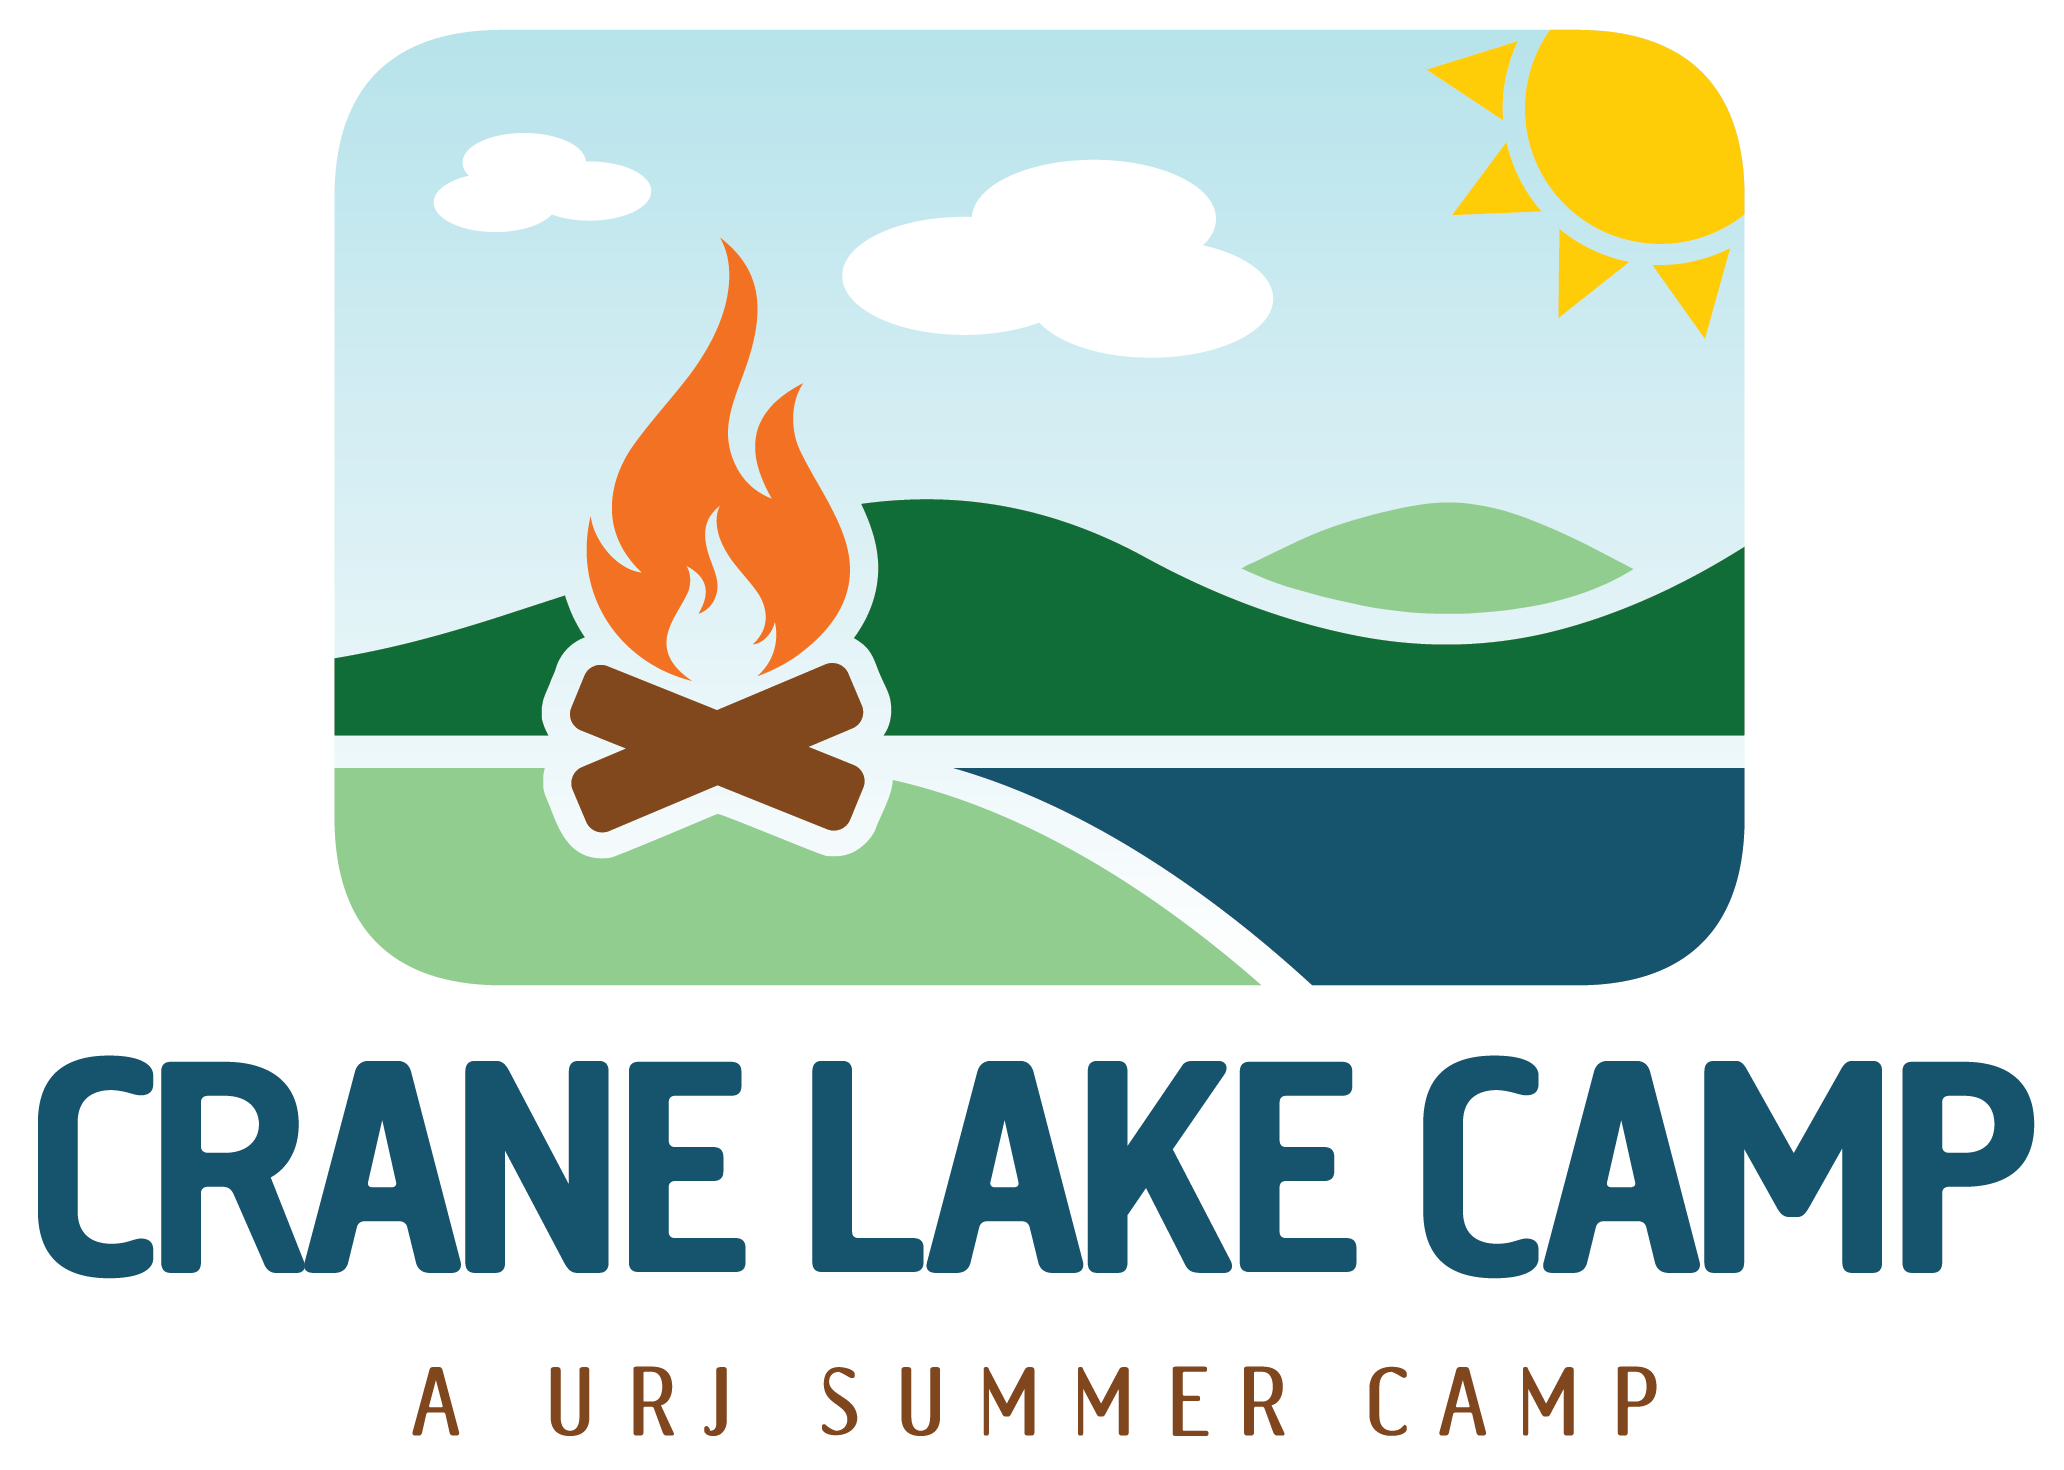 Camp Logo - Home - URJ Crane Lake Camp